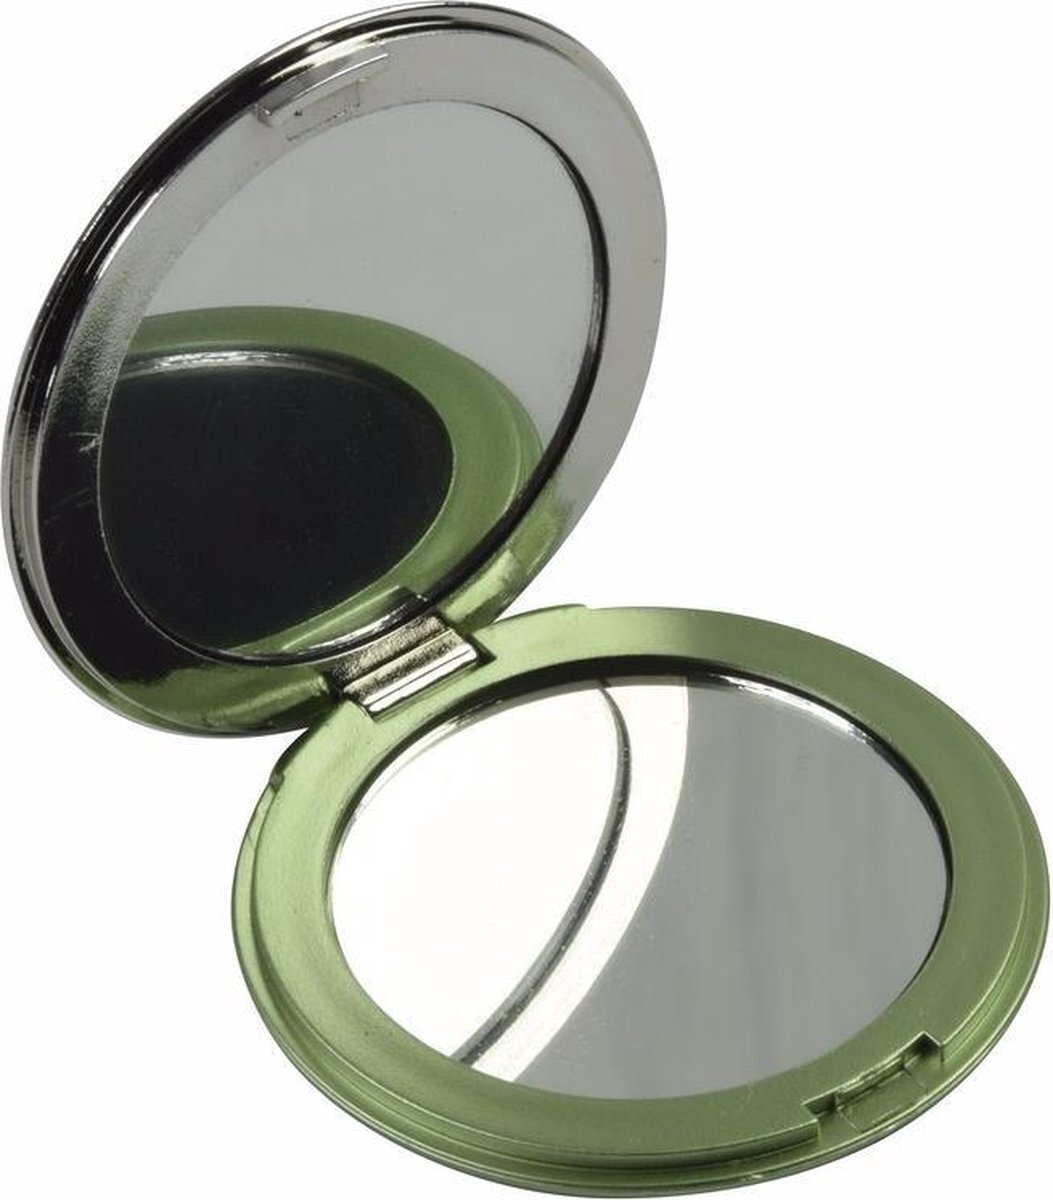 Bellat Zak spiegeltje groen - make up spiegel